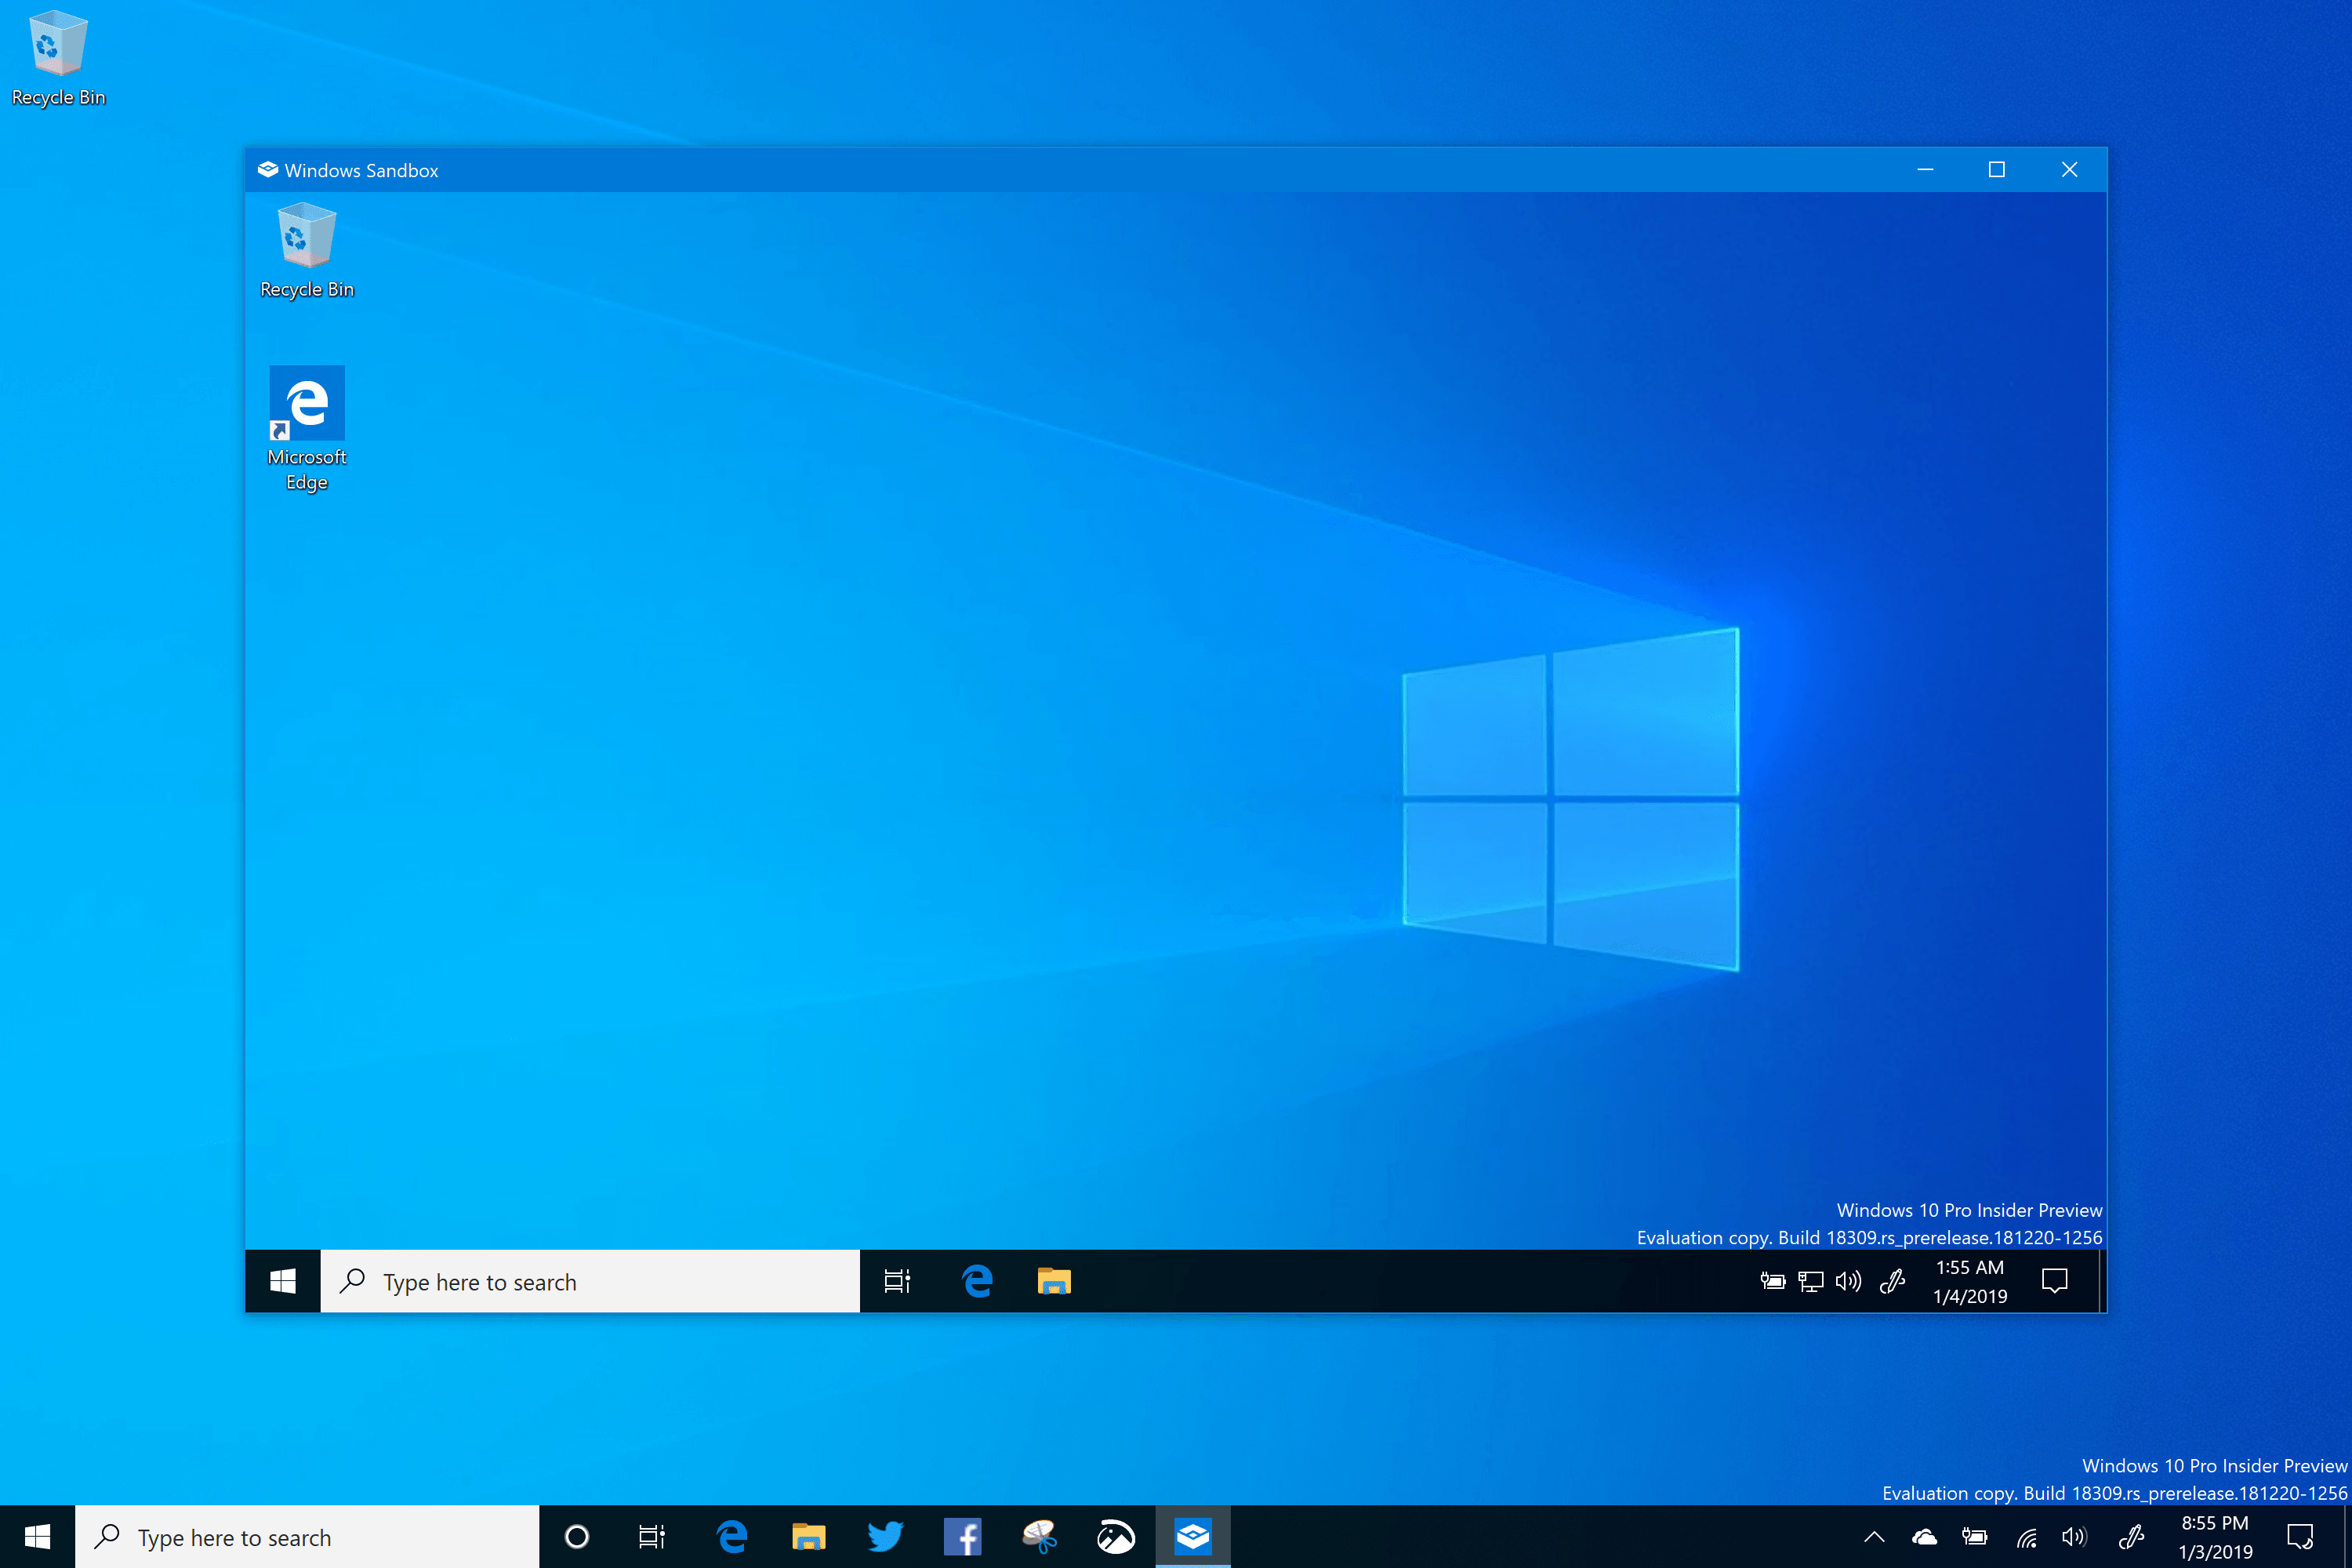 Windows Sandbox - Windows 10 (19H1) Build 18309